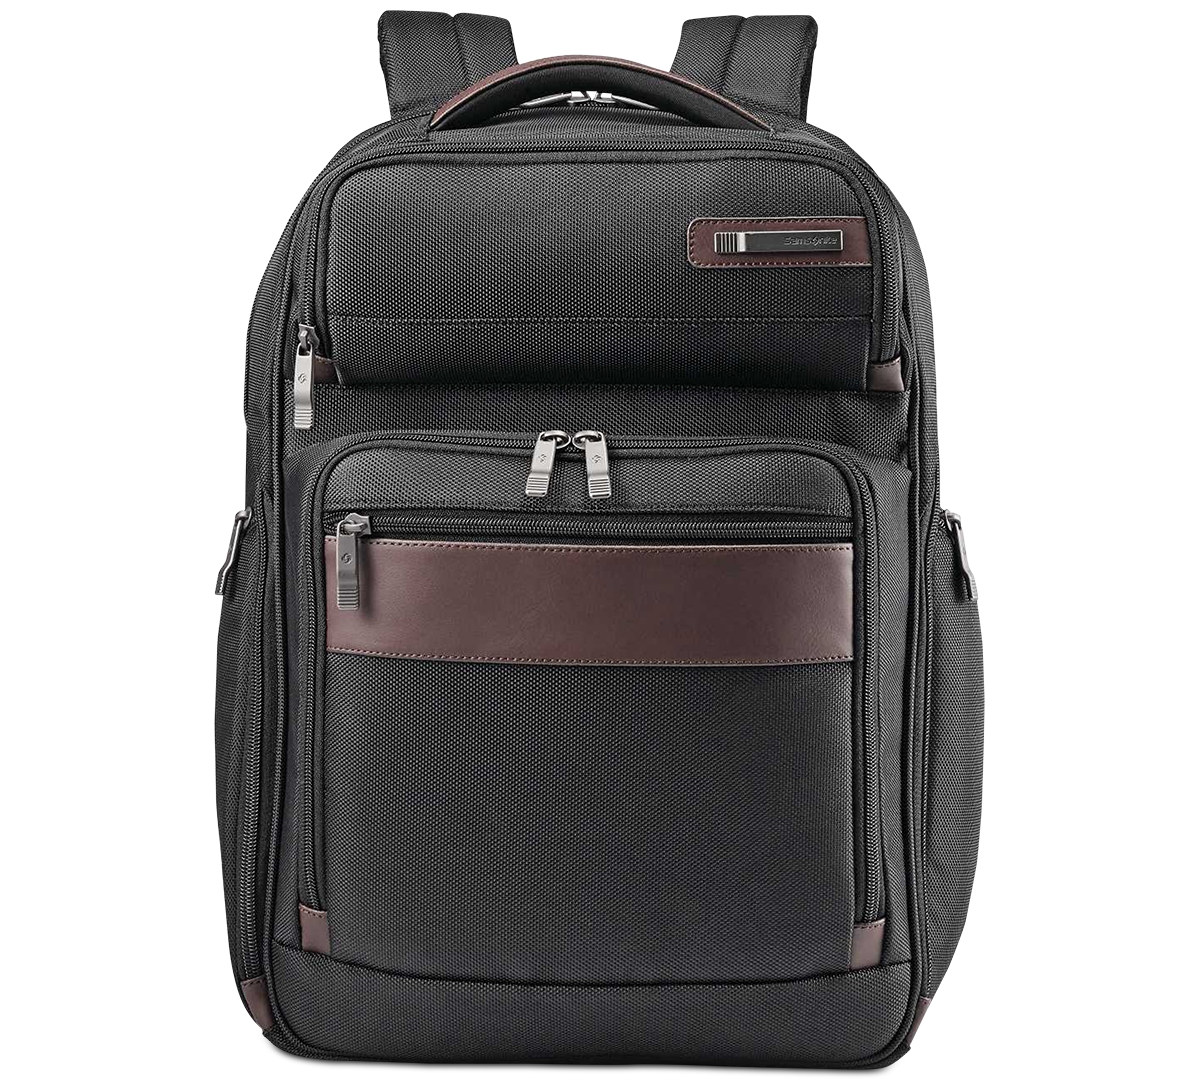 Kombi 17.5" Large Backpack - Black/brown